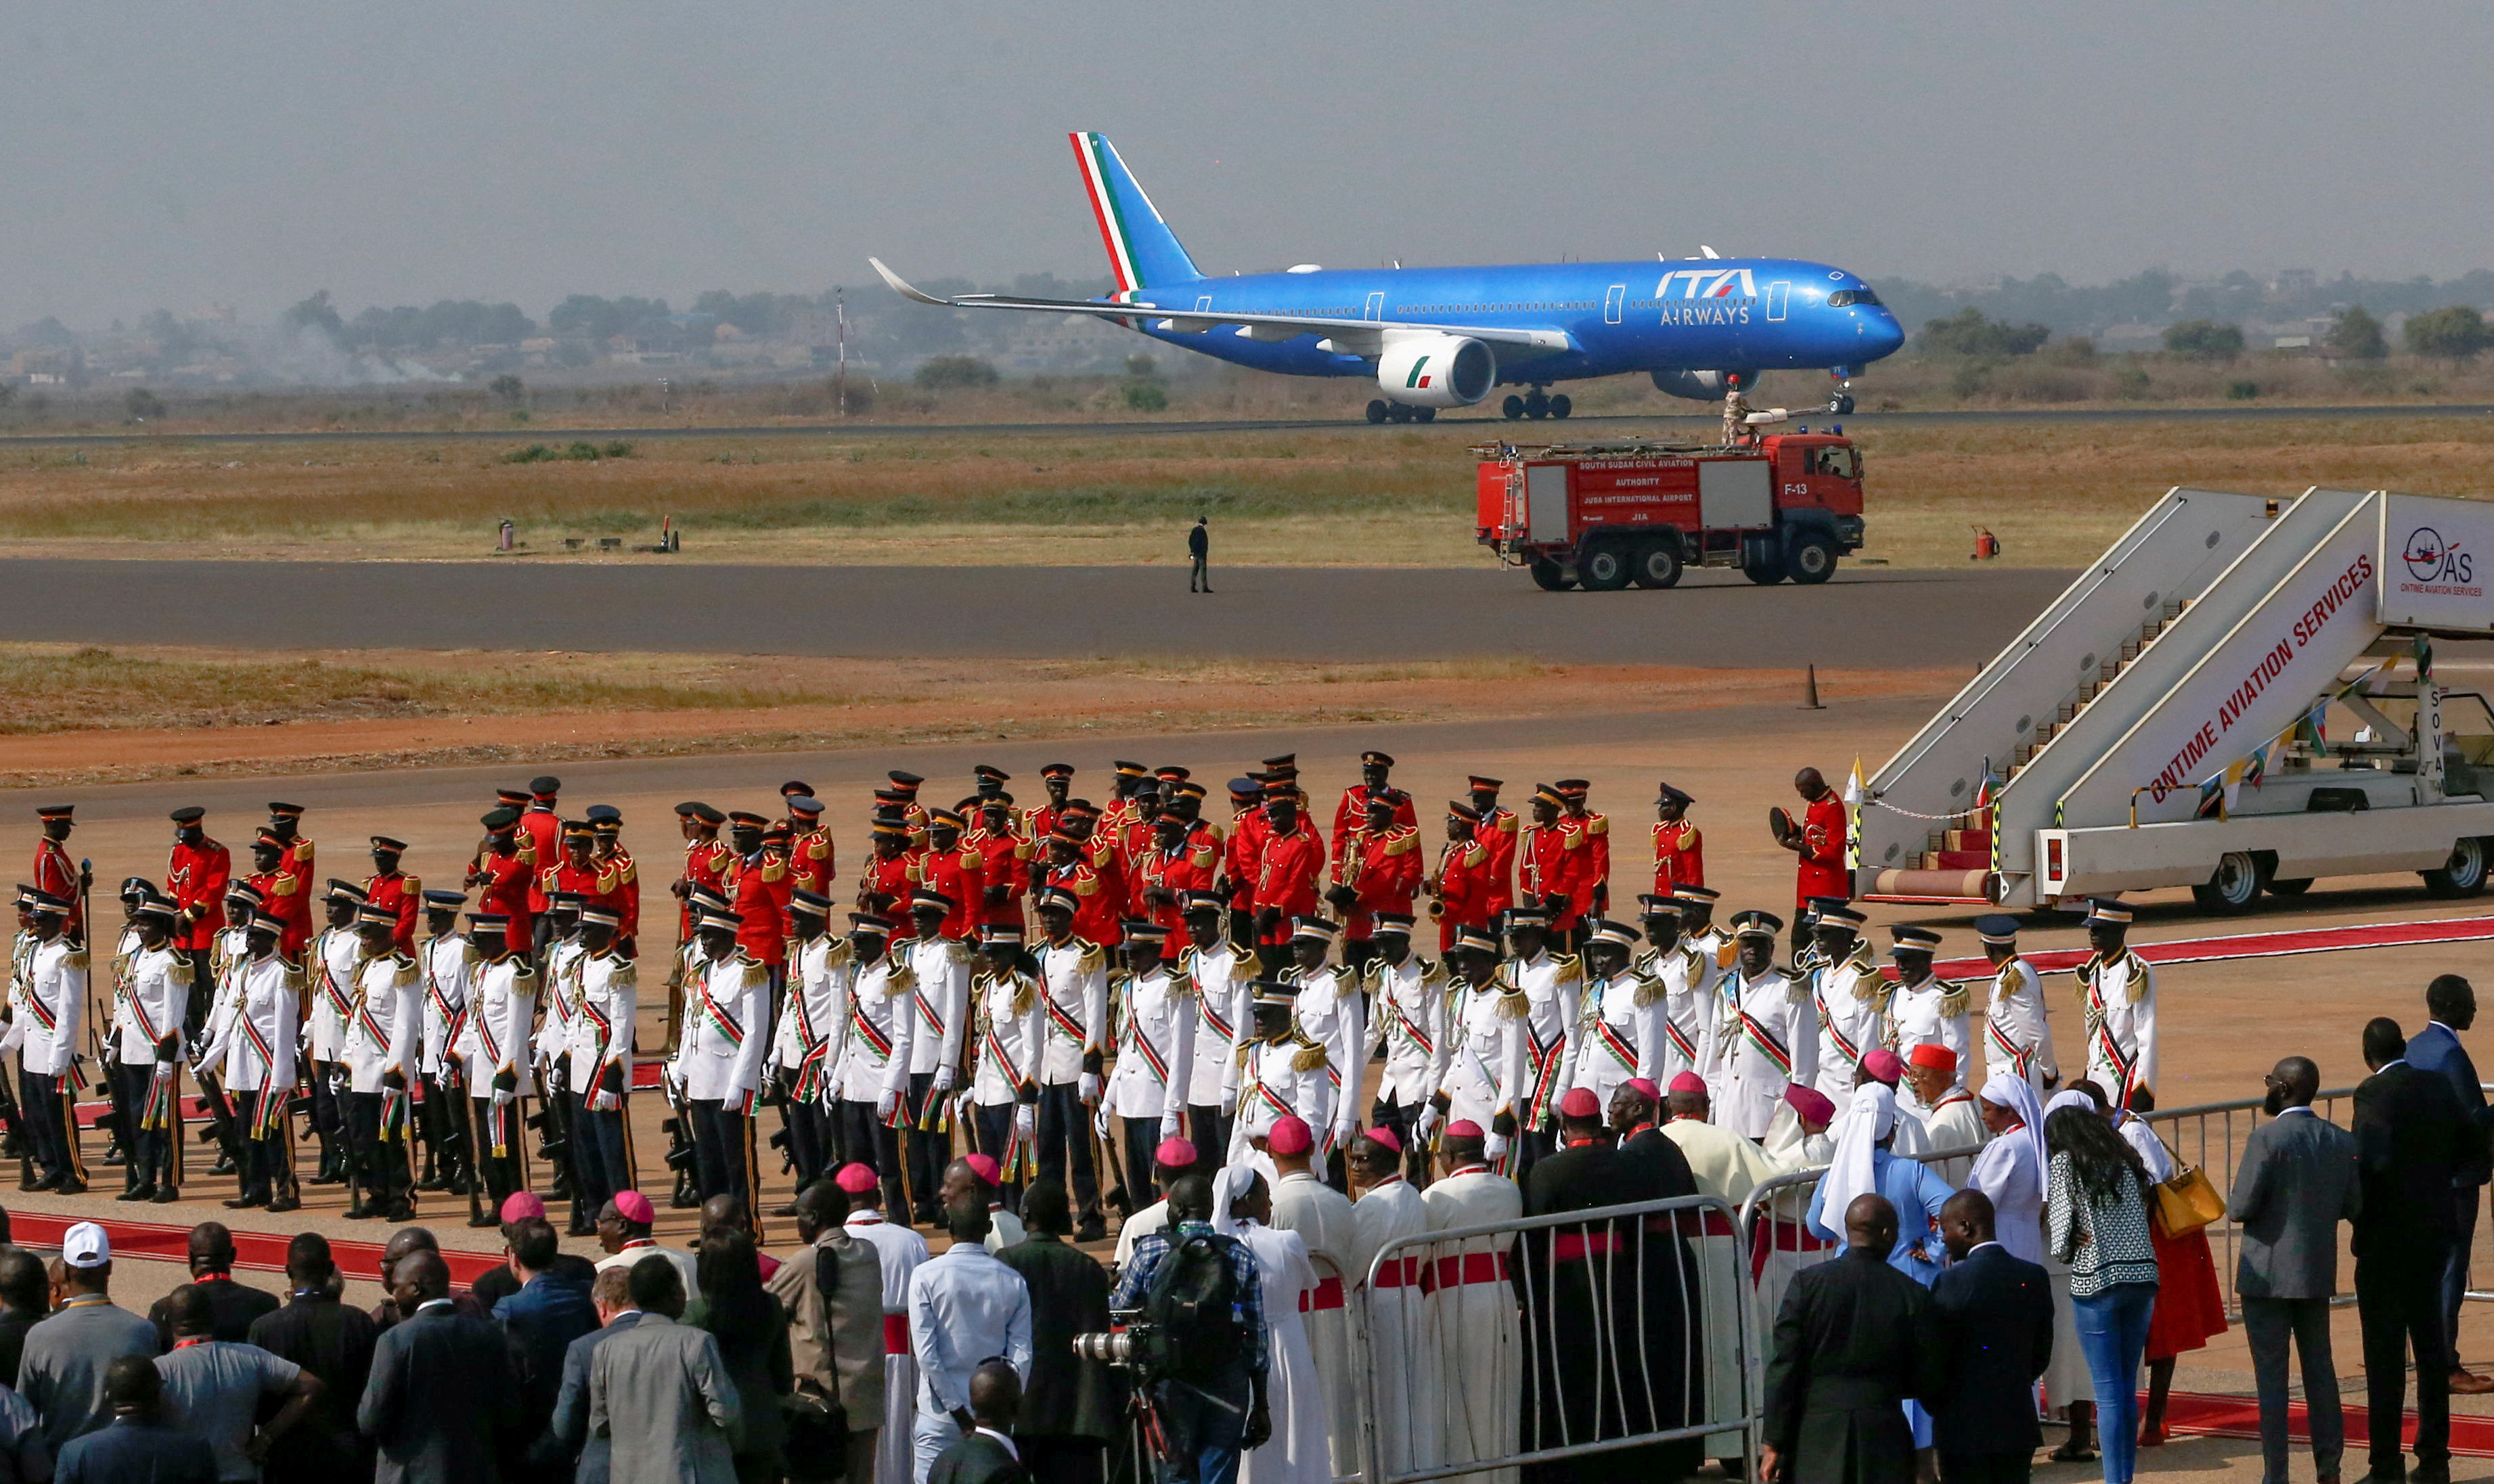 Pope Francis makes his papal visit to South Sudan